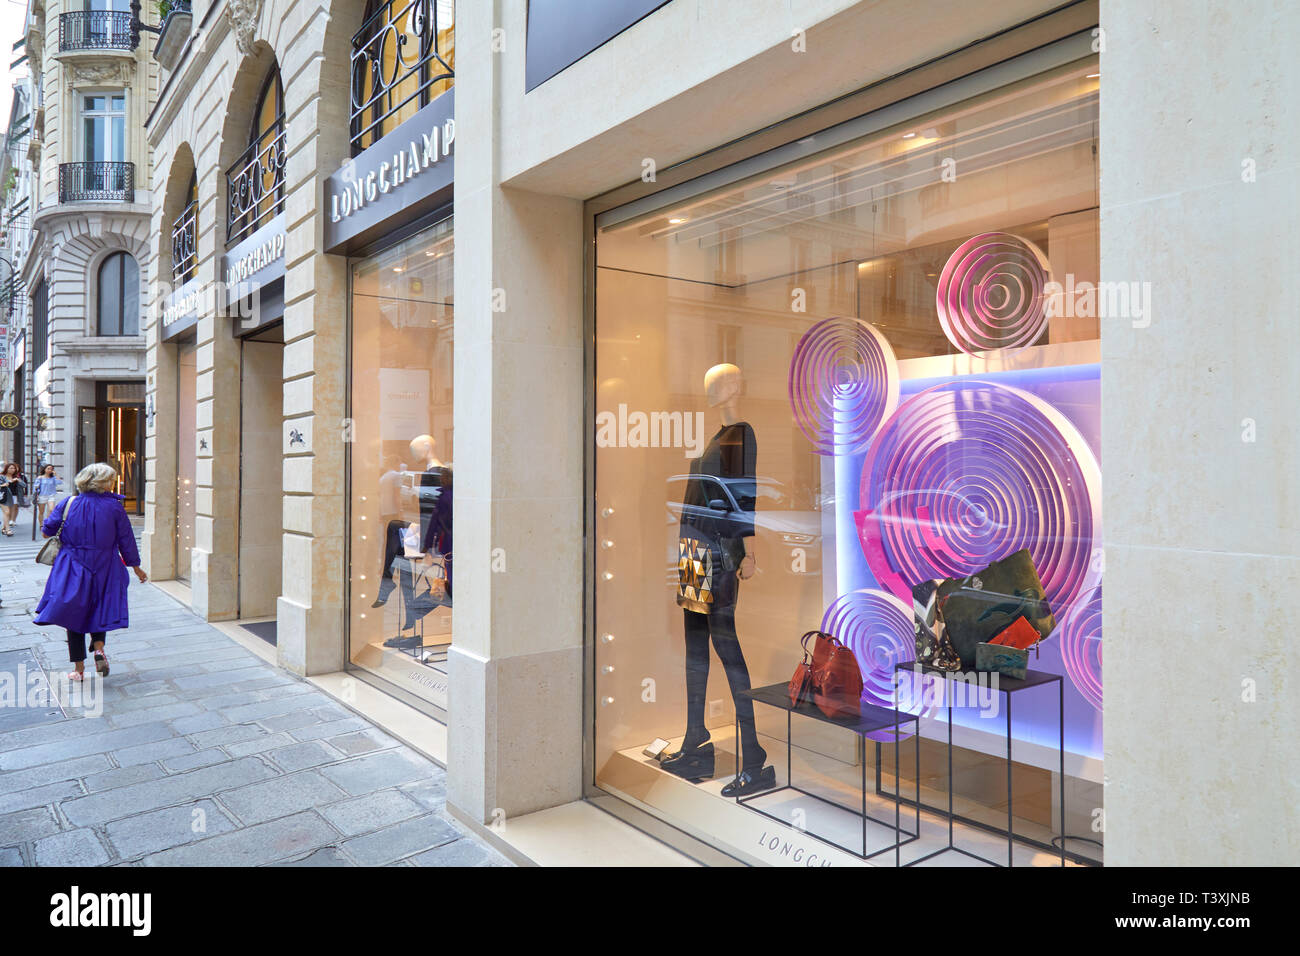 PARIS, FRANCE - JULY 22, 2017: Longchamp fashion luxury store in Paris, people passing, France. Stock Photo